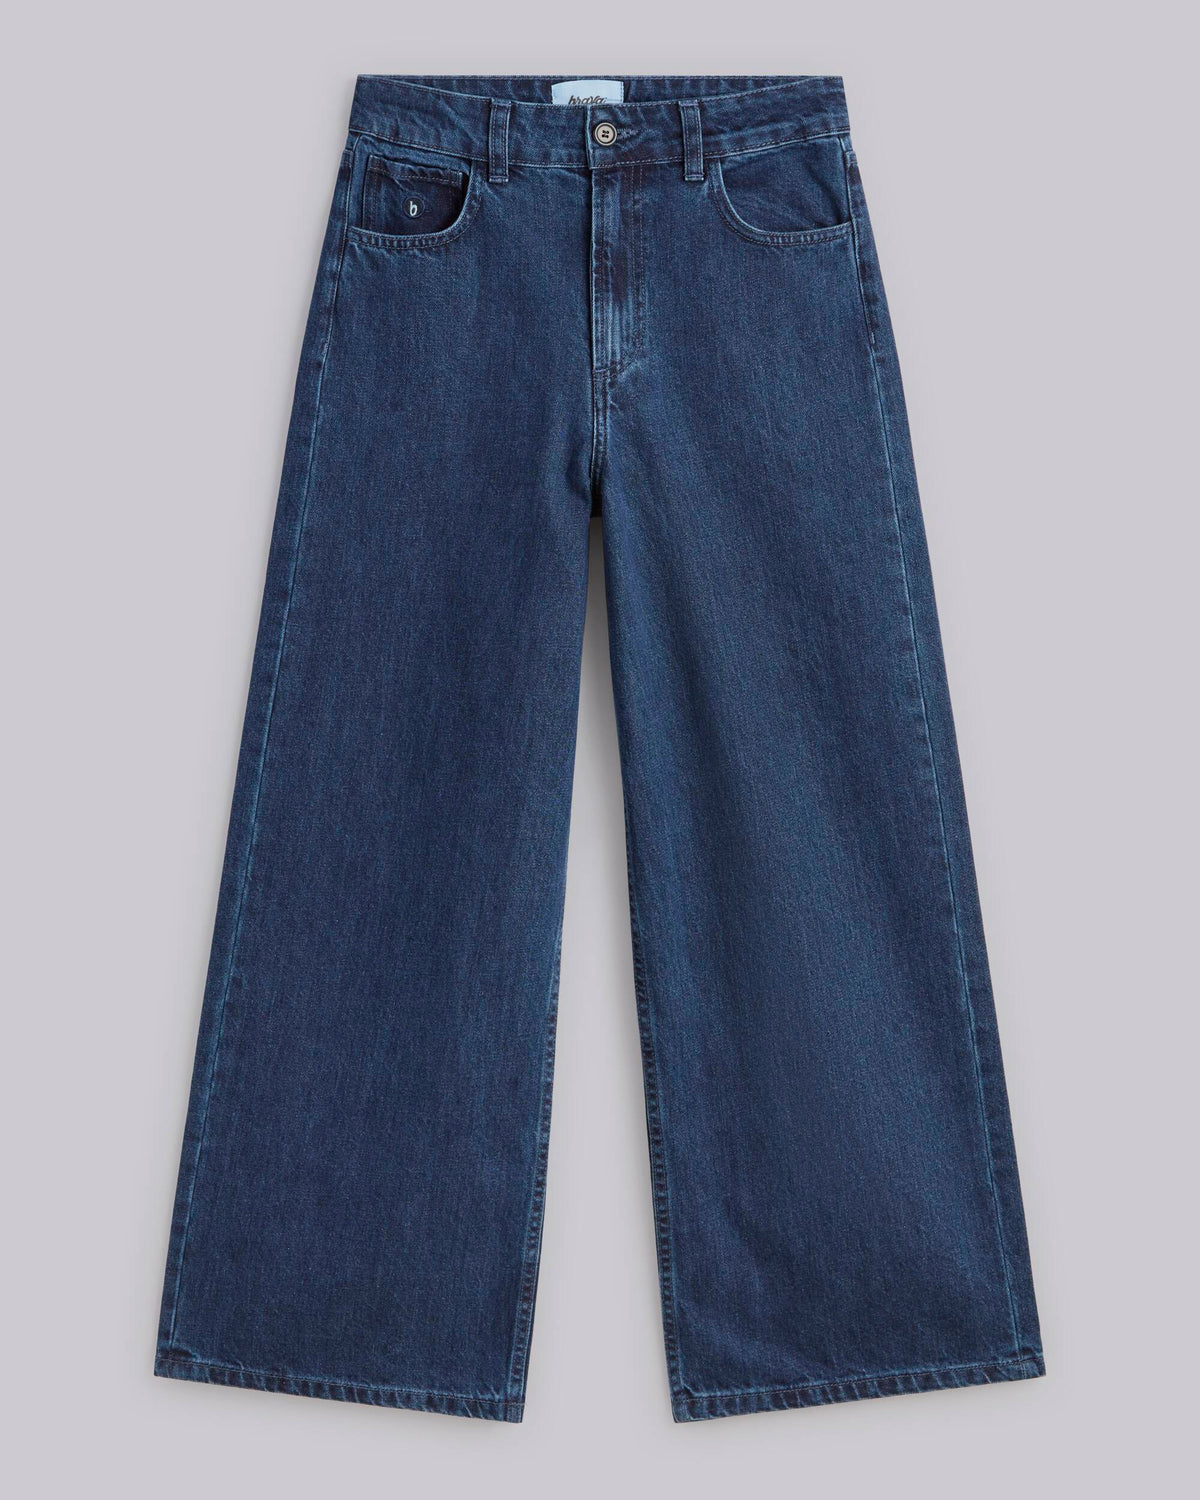 ZIZOCWA Denim Leggings With Pockets Boot Cut Pants For Women Women'S Pencil  Pants Casual Button Zipper Pocket Jeans Back Strap Pants Jean 